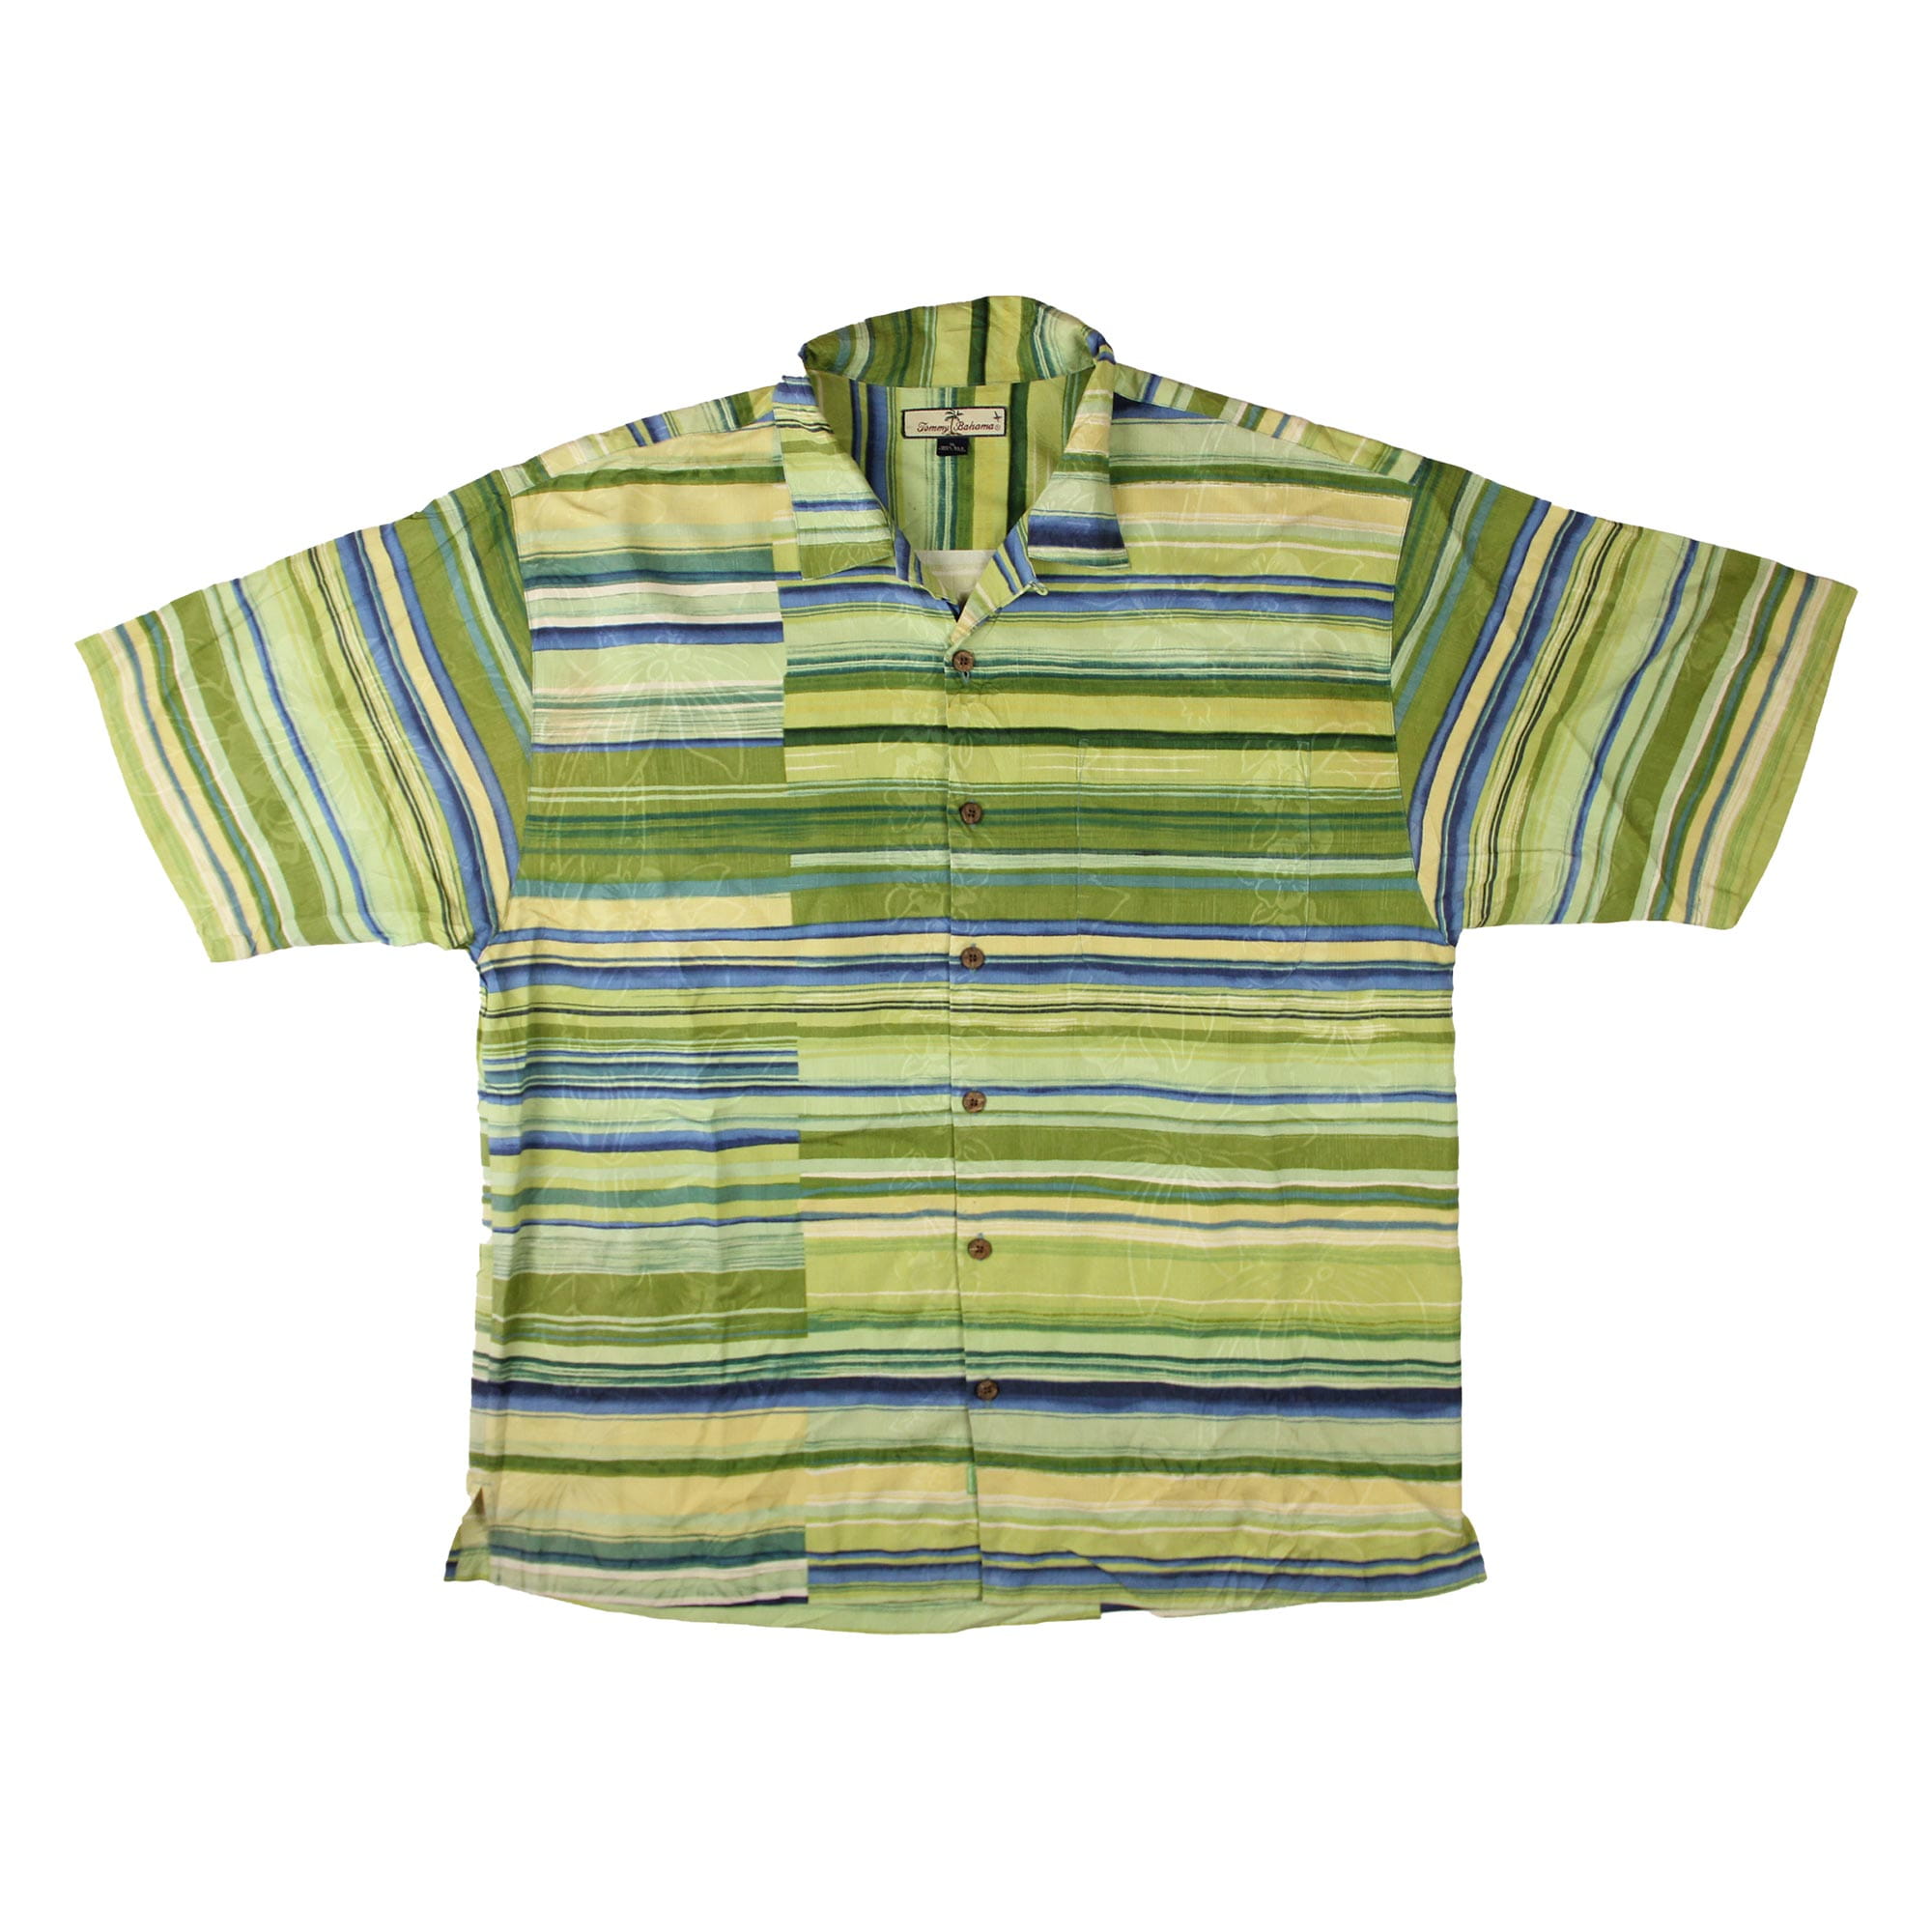 Tommy Bahama Shirt - XL